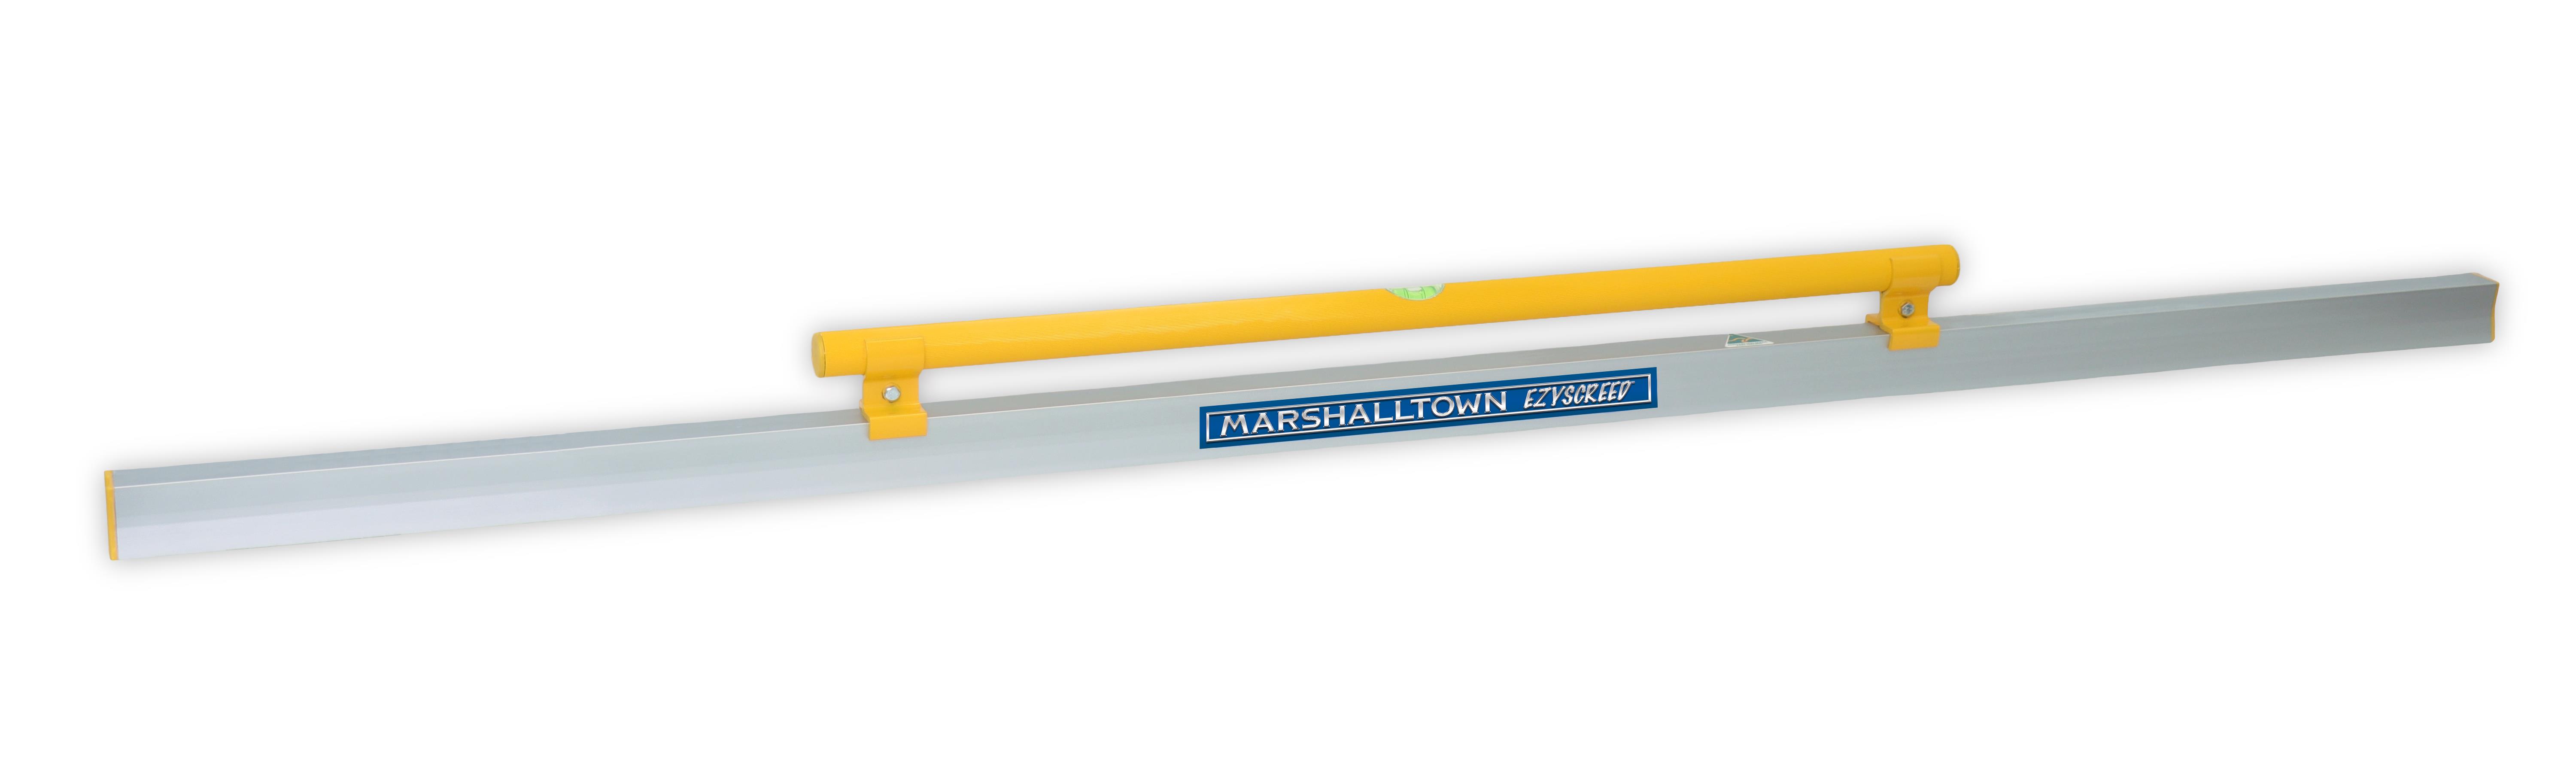 Marshalltown (28397) product